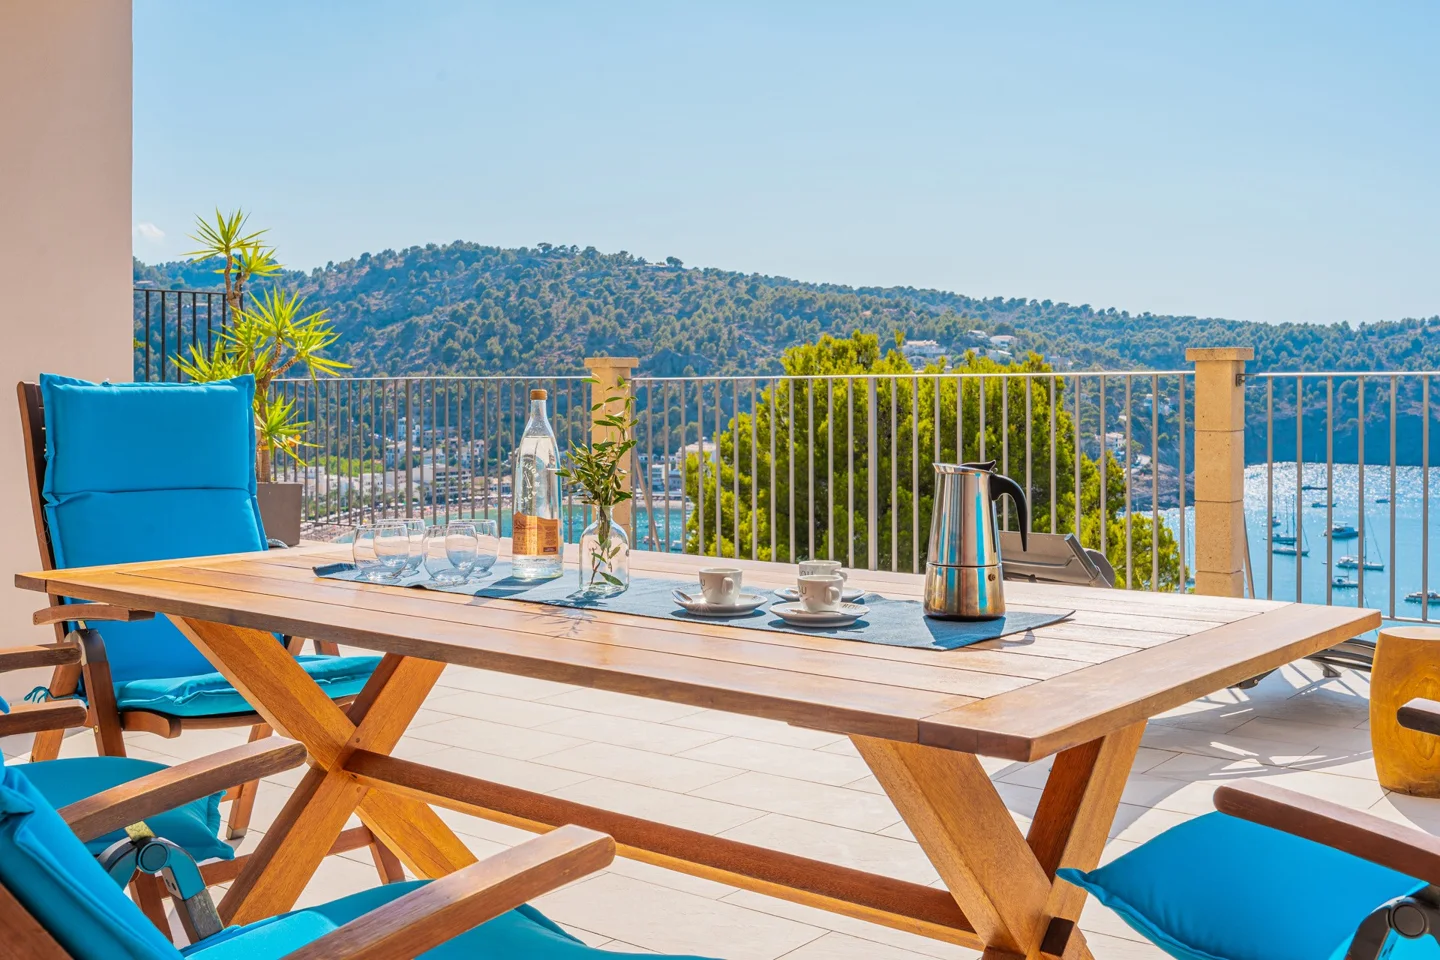 Holiday rental:DRIAT 4110, Mediterranean villa with fantastic harbor views